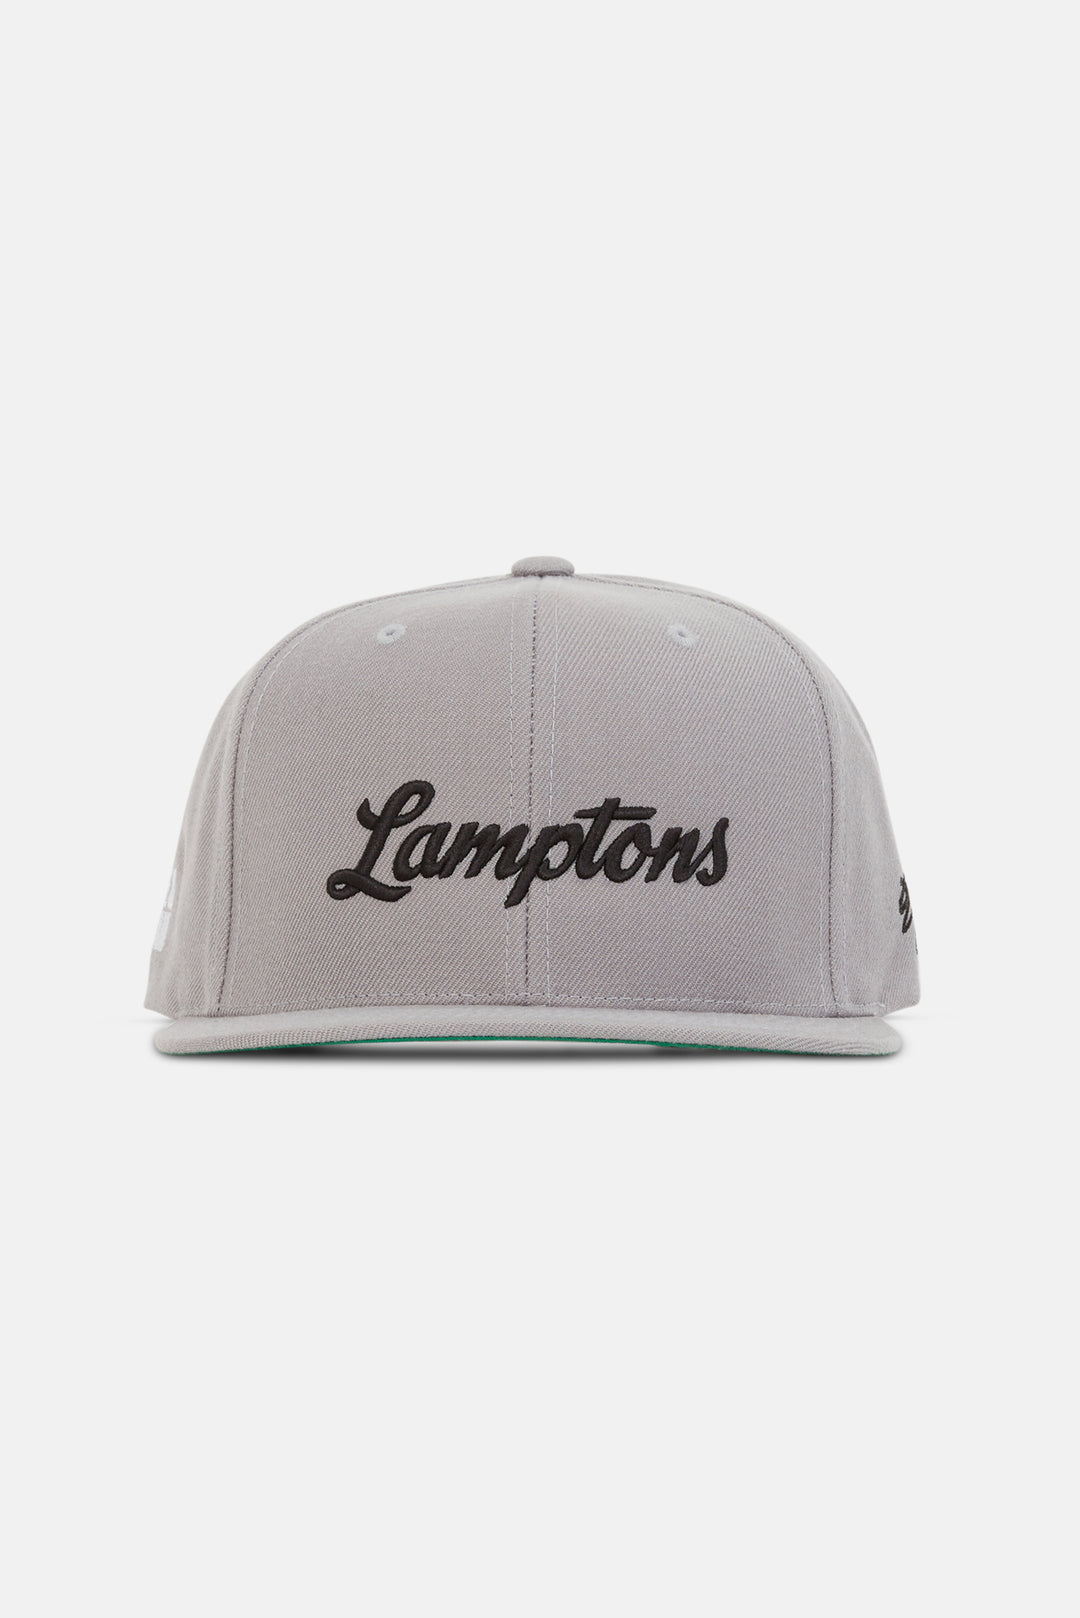 x SSUR Lamptons Snapback Grey - blueandcream